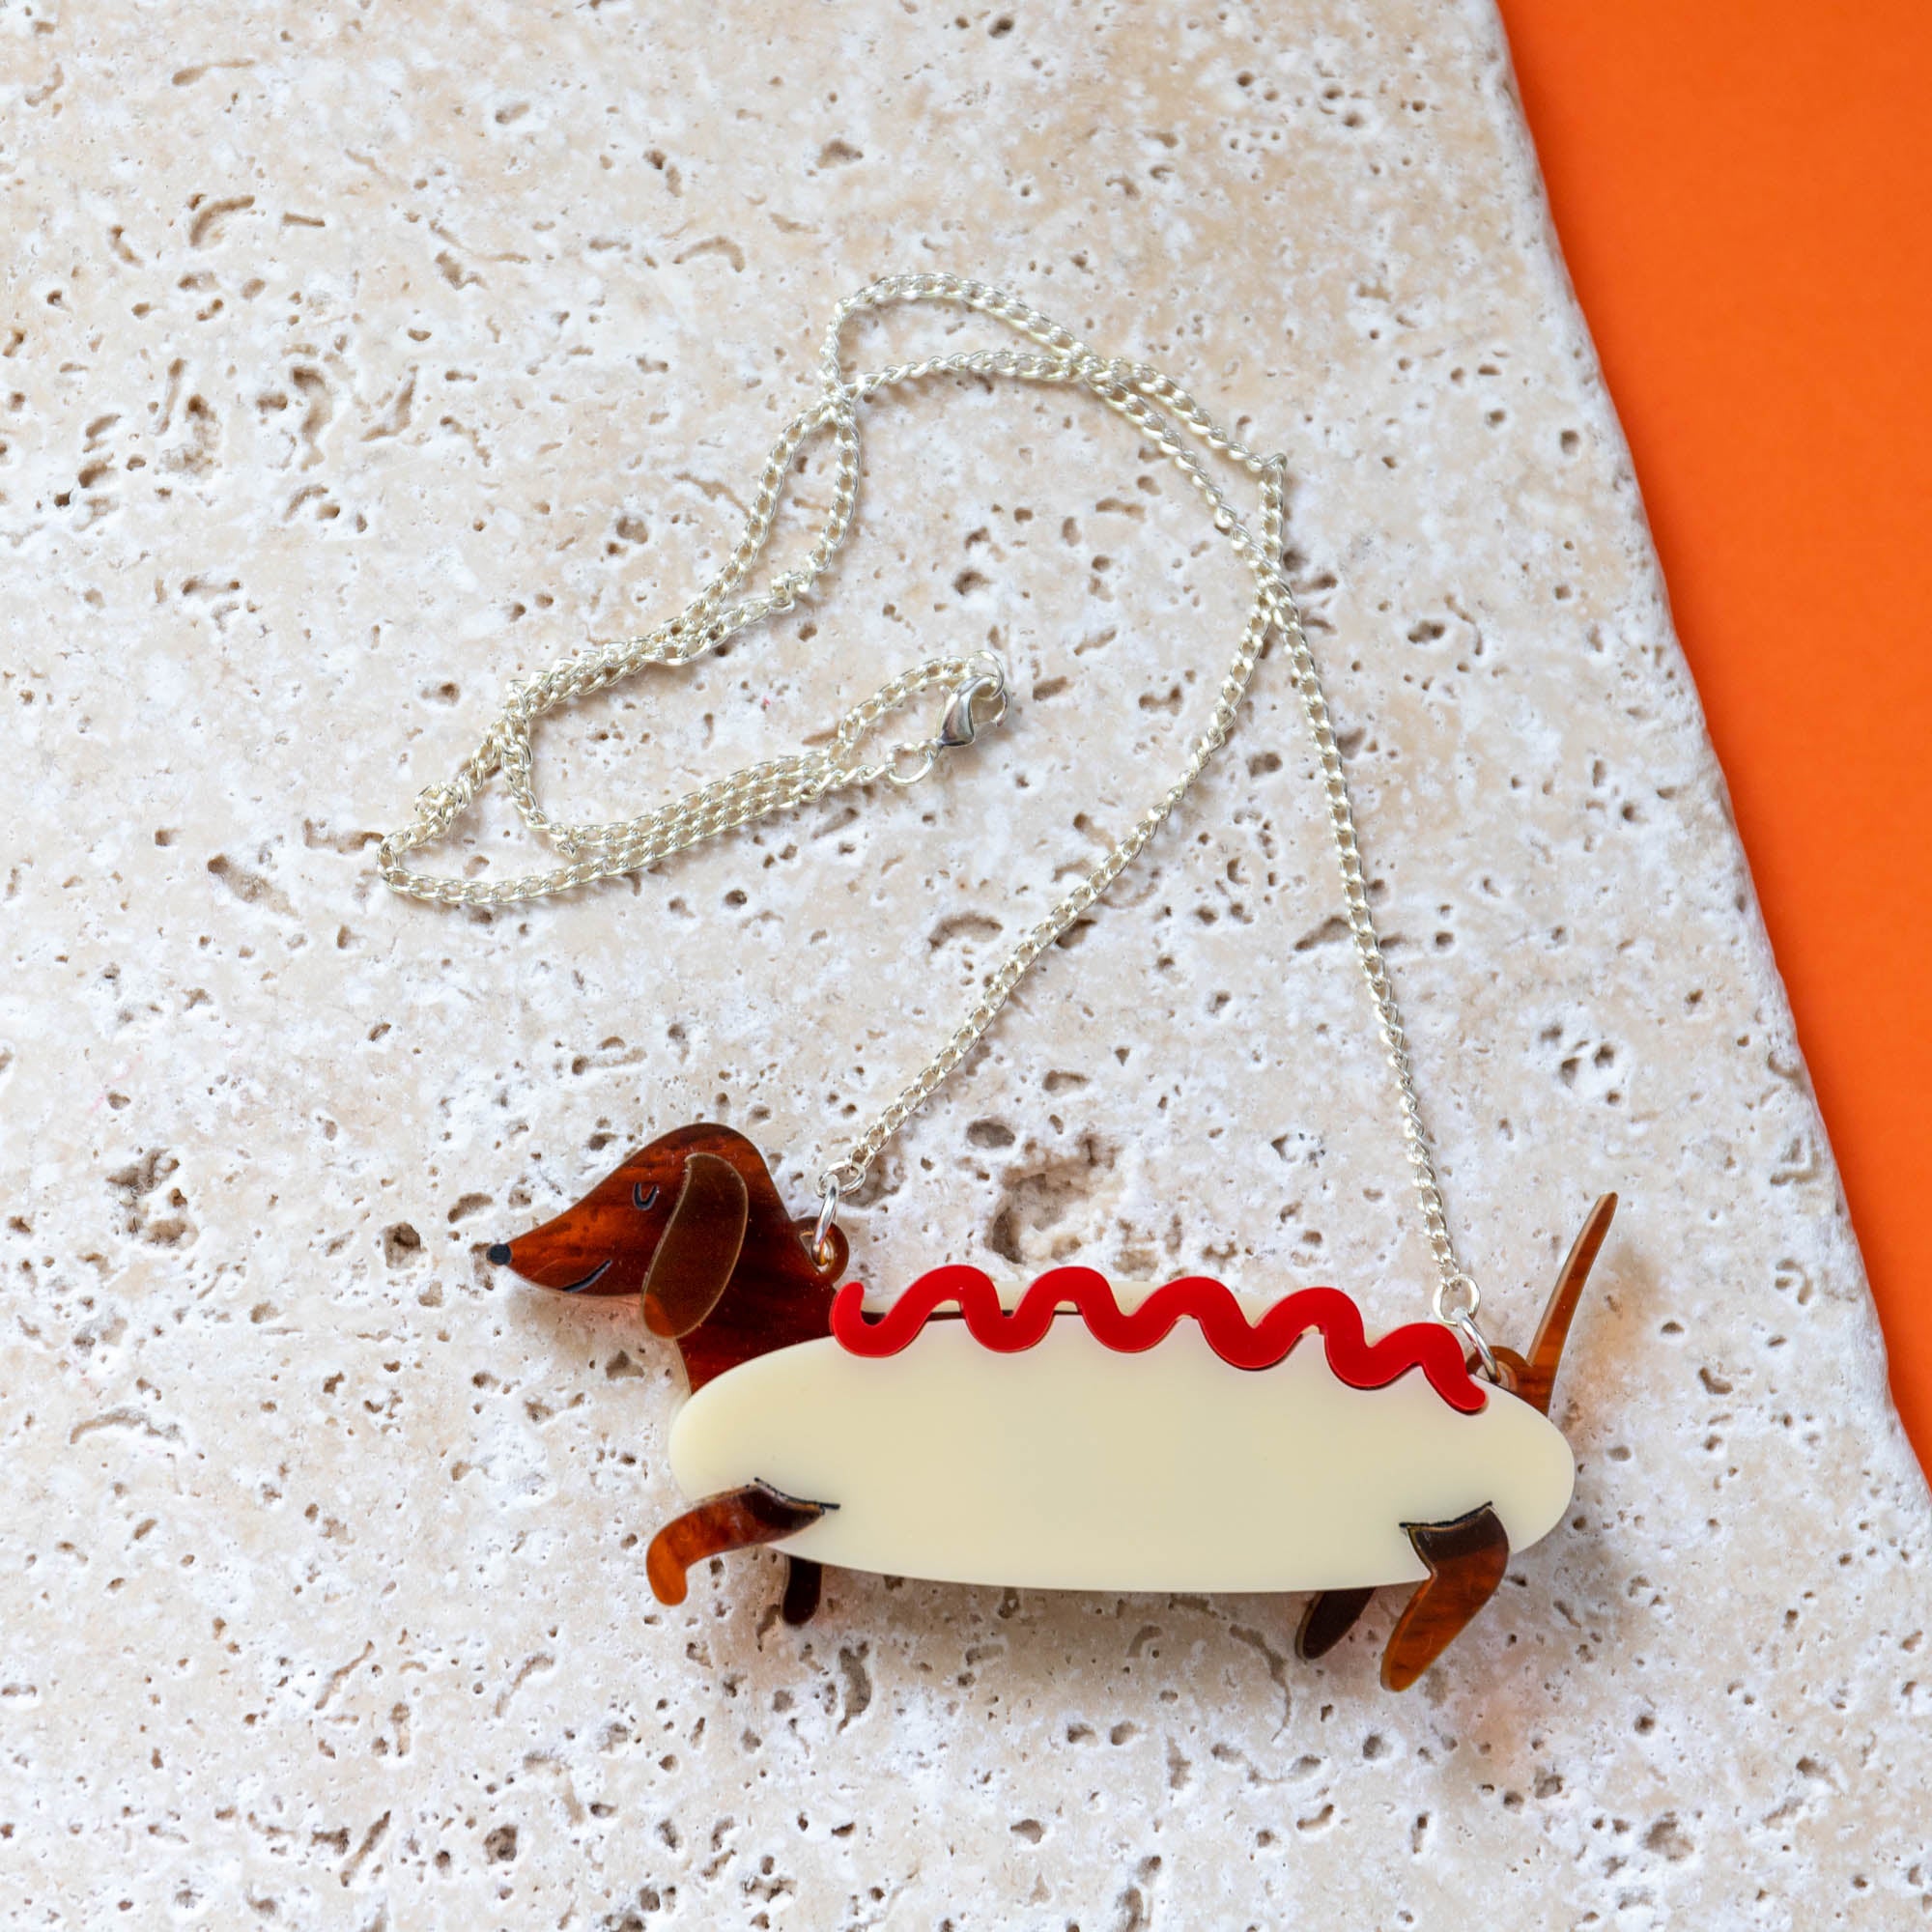 Dachshund Hot Dog Costume Necklace - Finest Imaginary